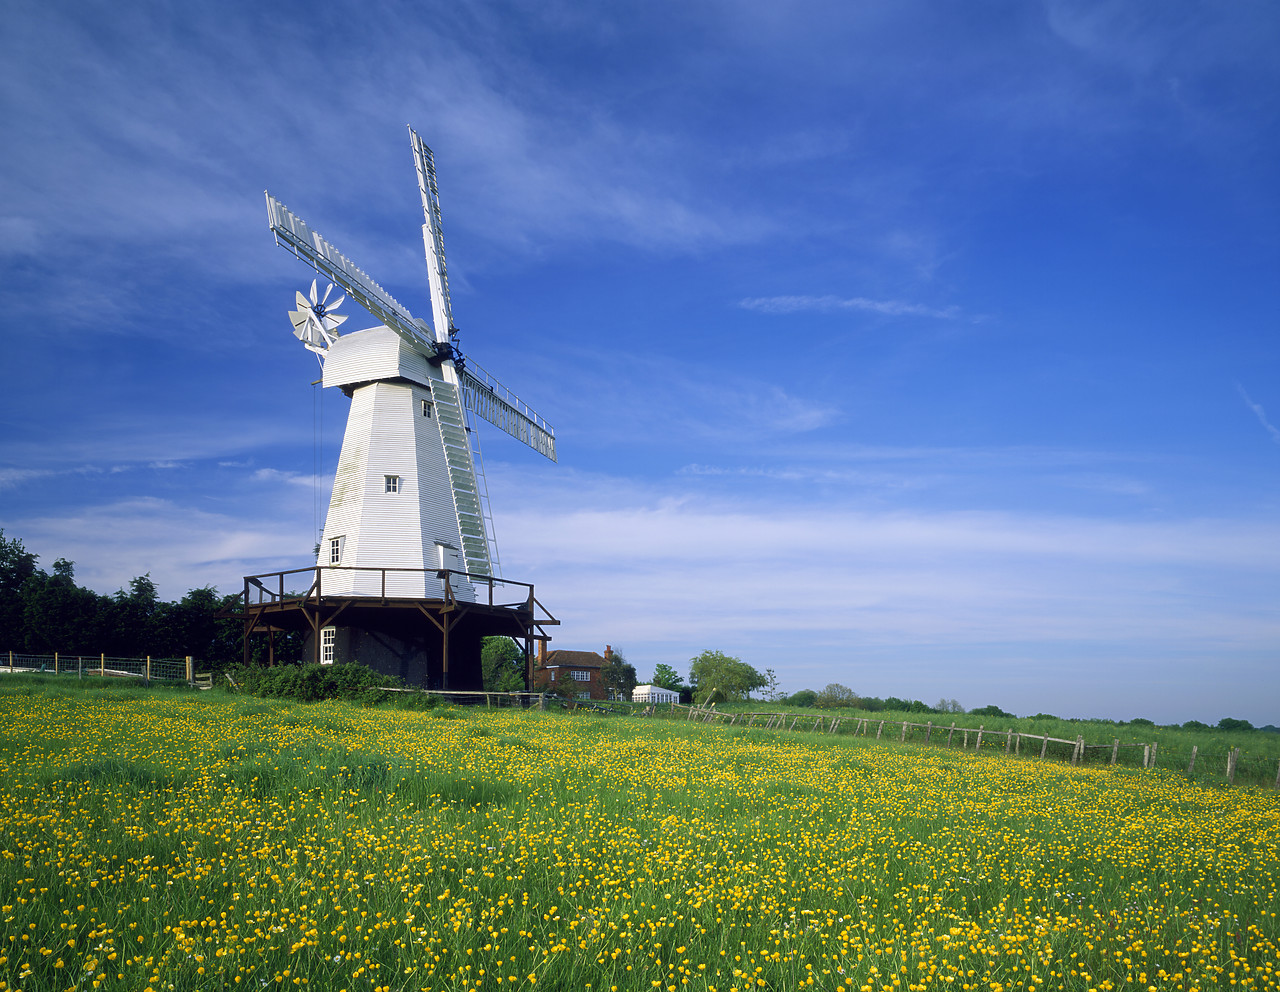 #020076-4 - Windmill & Field of Buttercups, Woodchurch, Kent, England